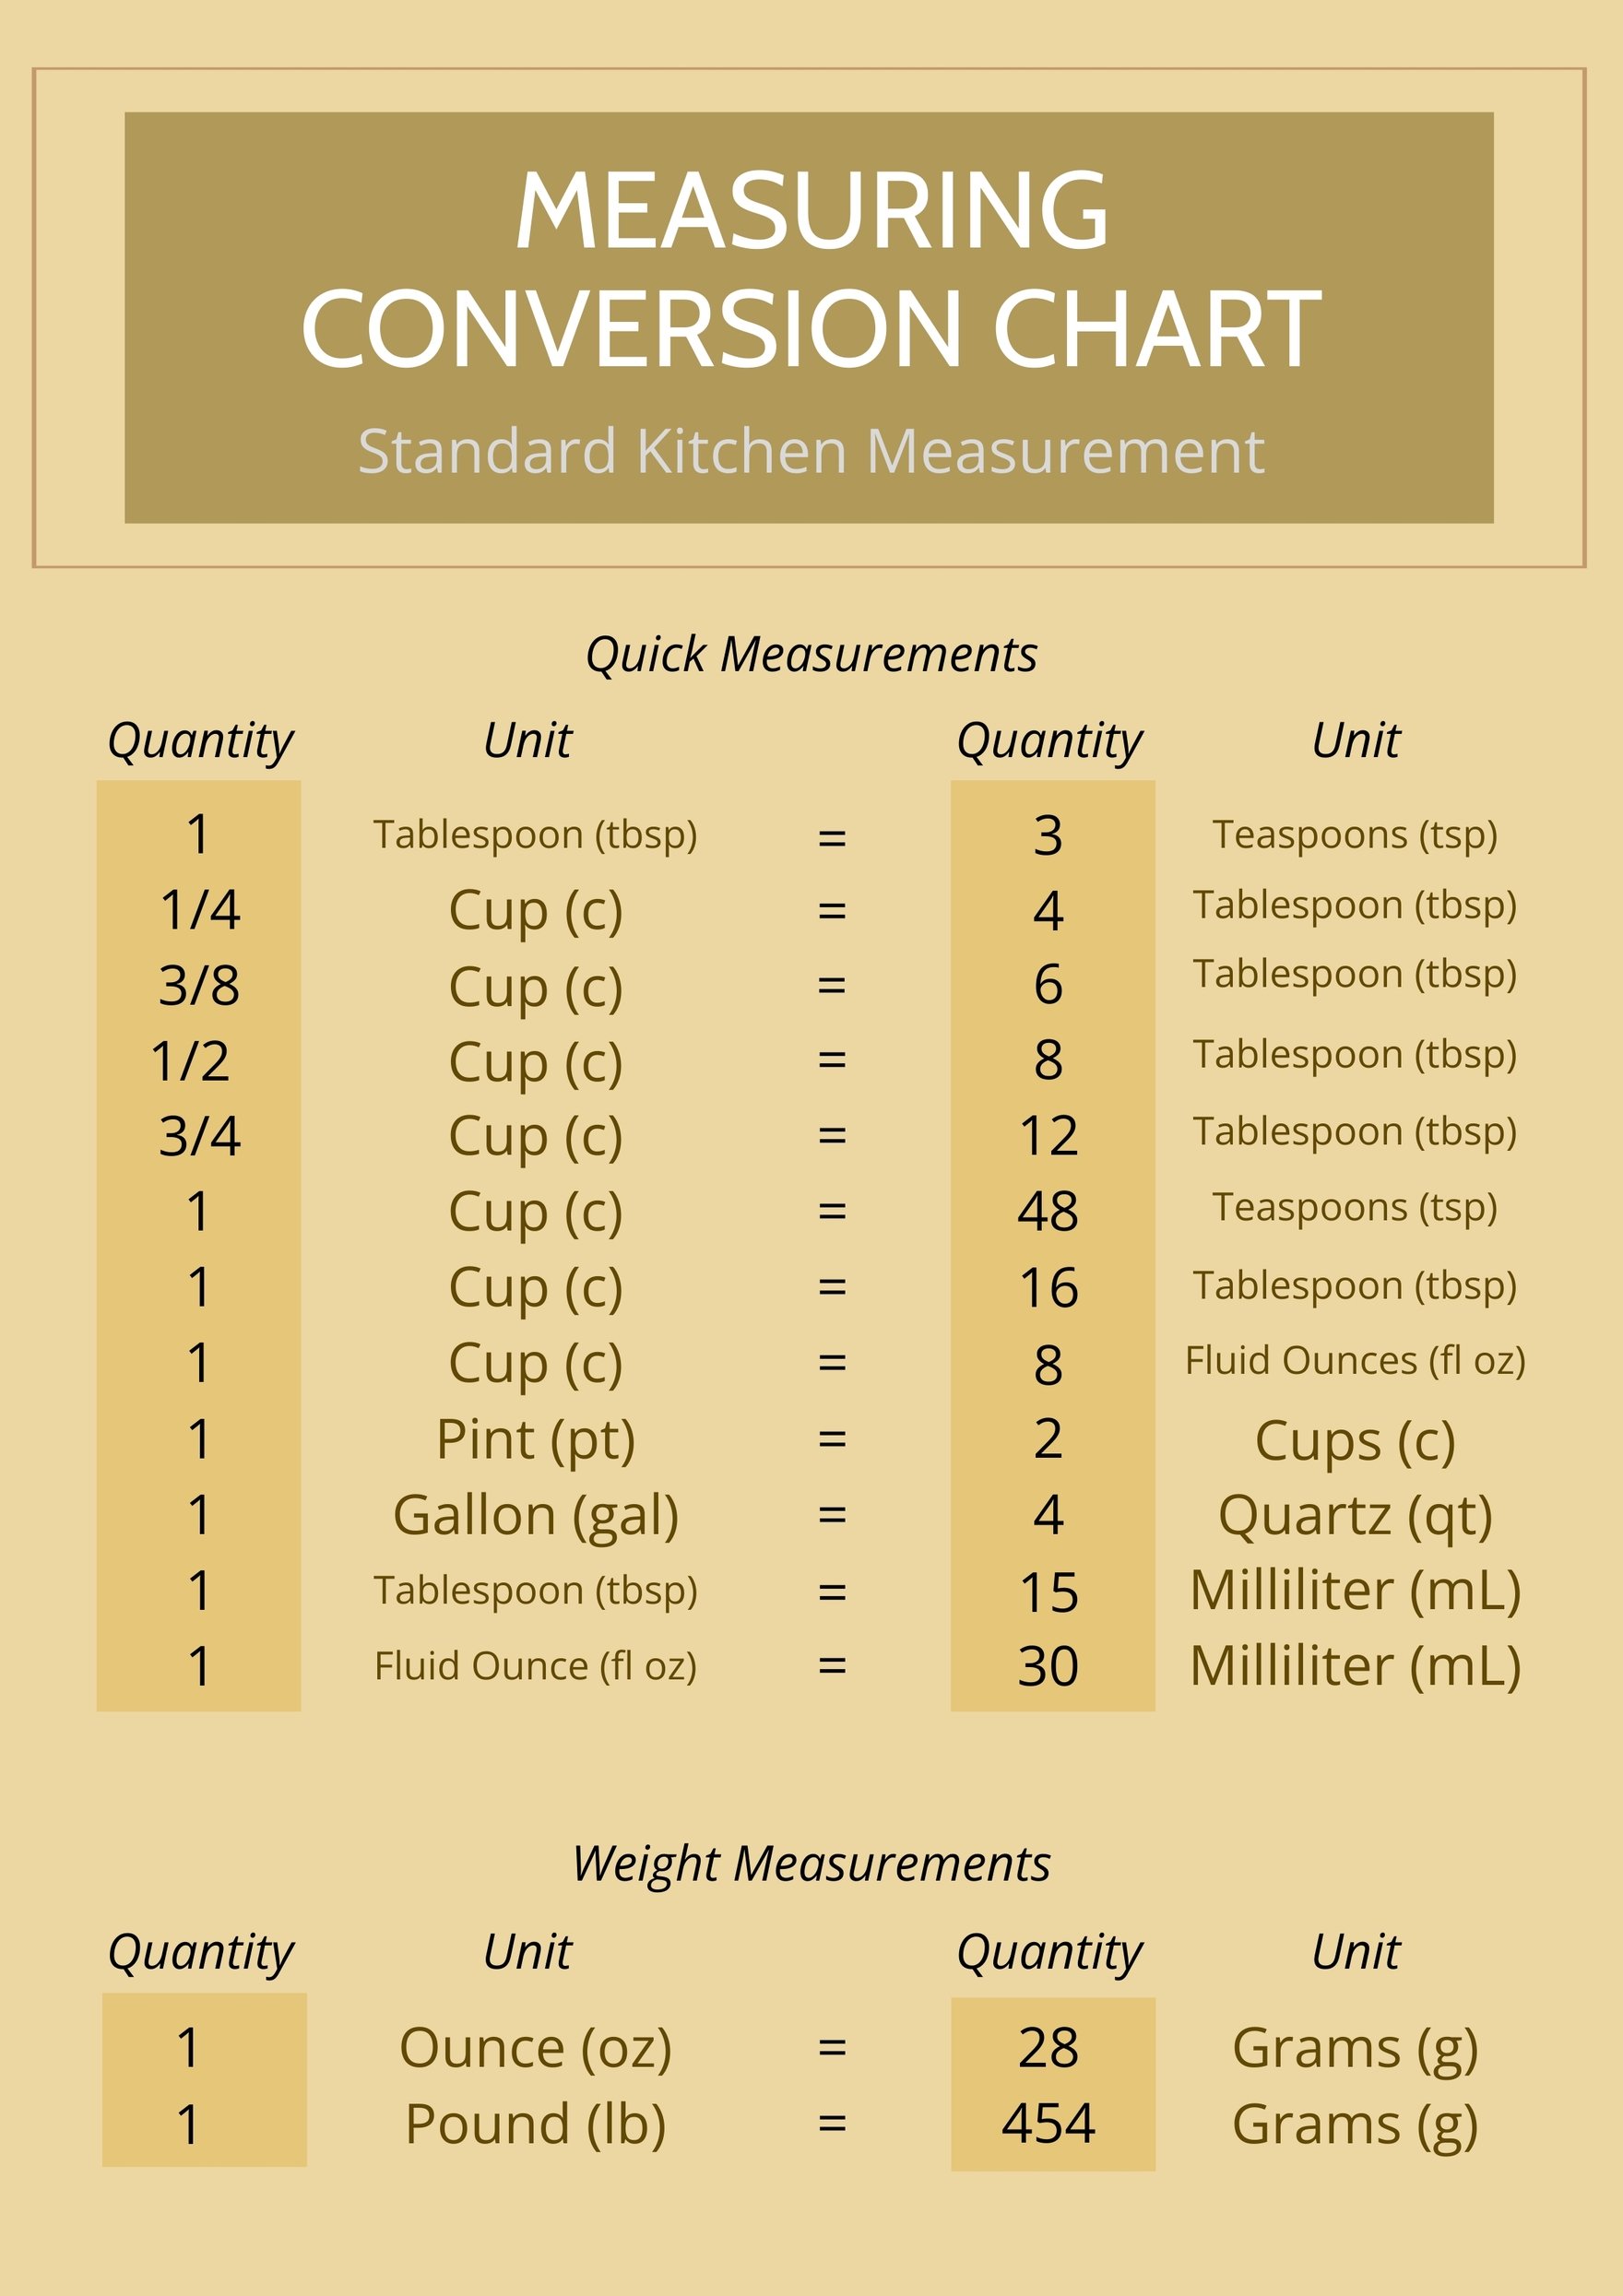 Measuring Conversion Chart in PDF, Illustrator